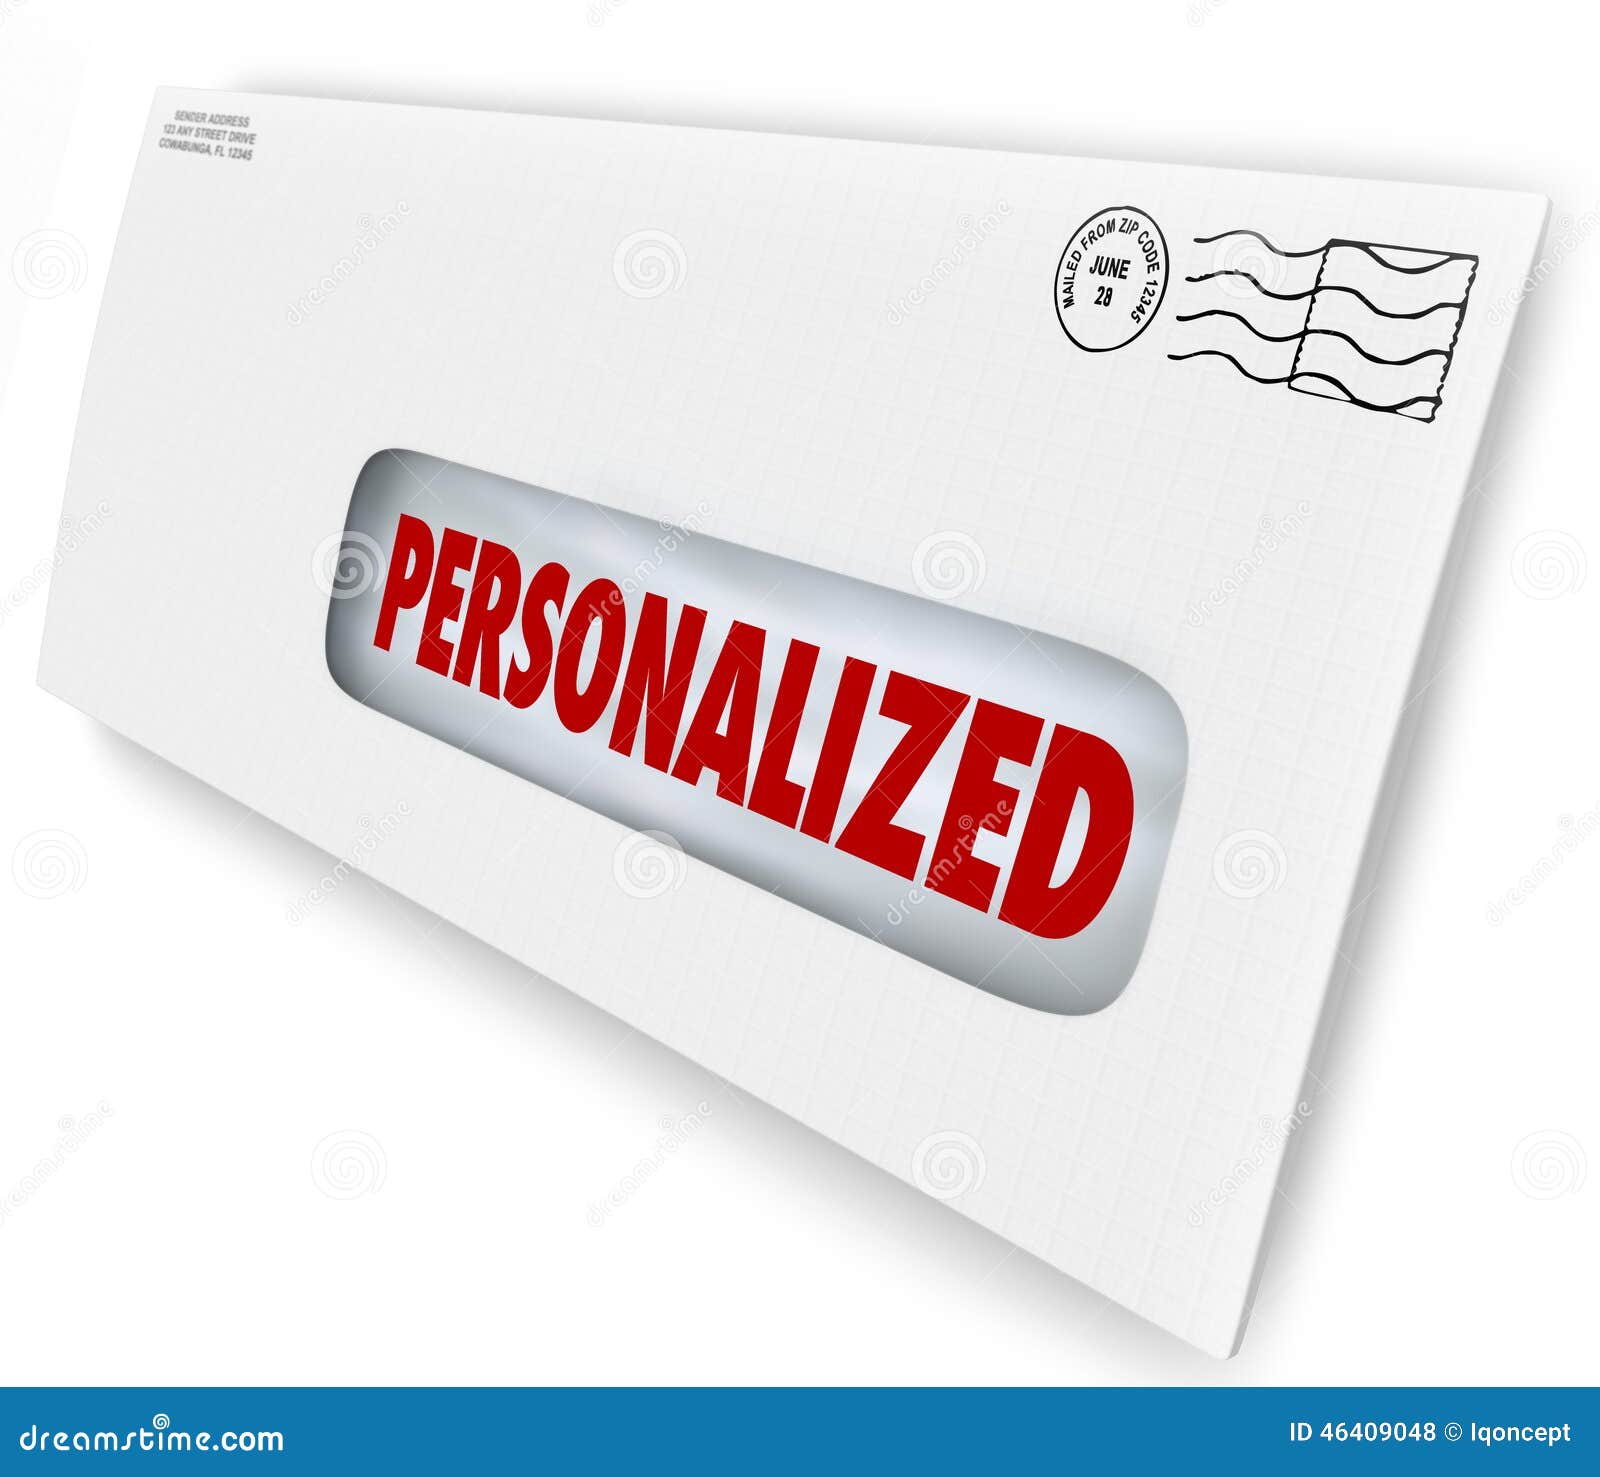 personalized envelope mailed message special unique communication